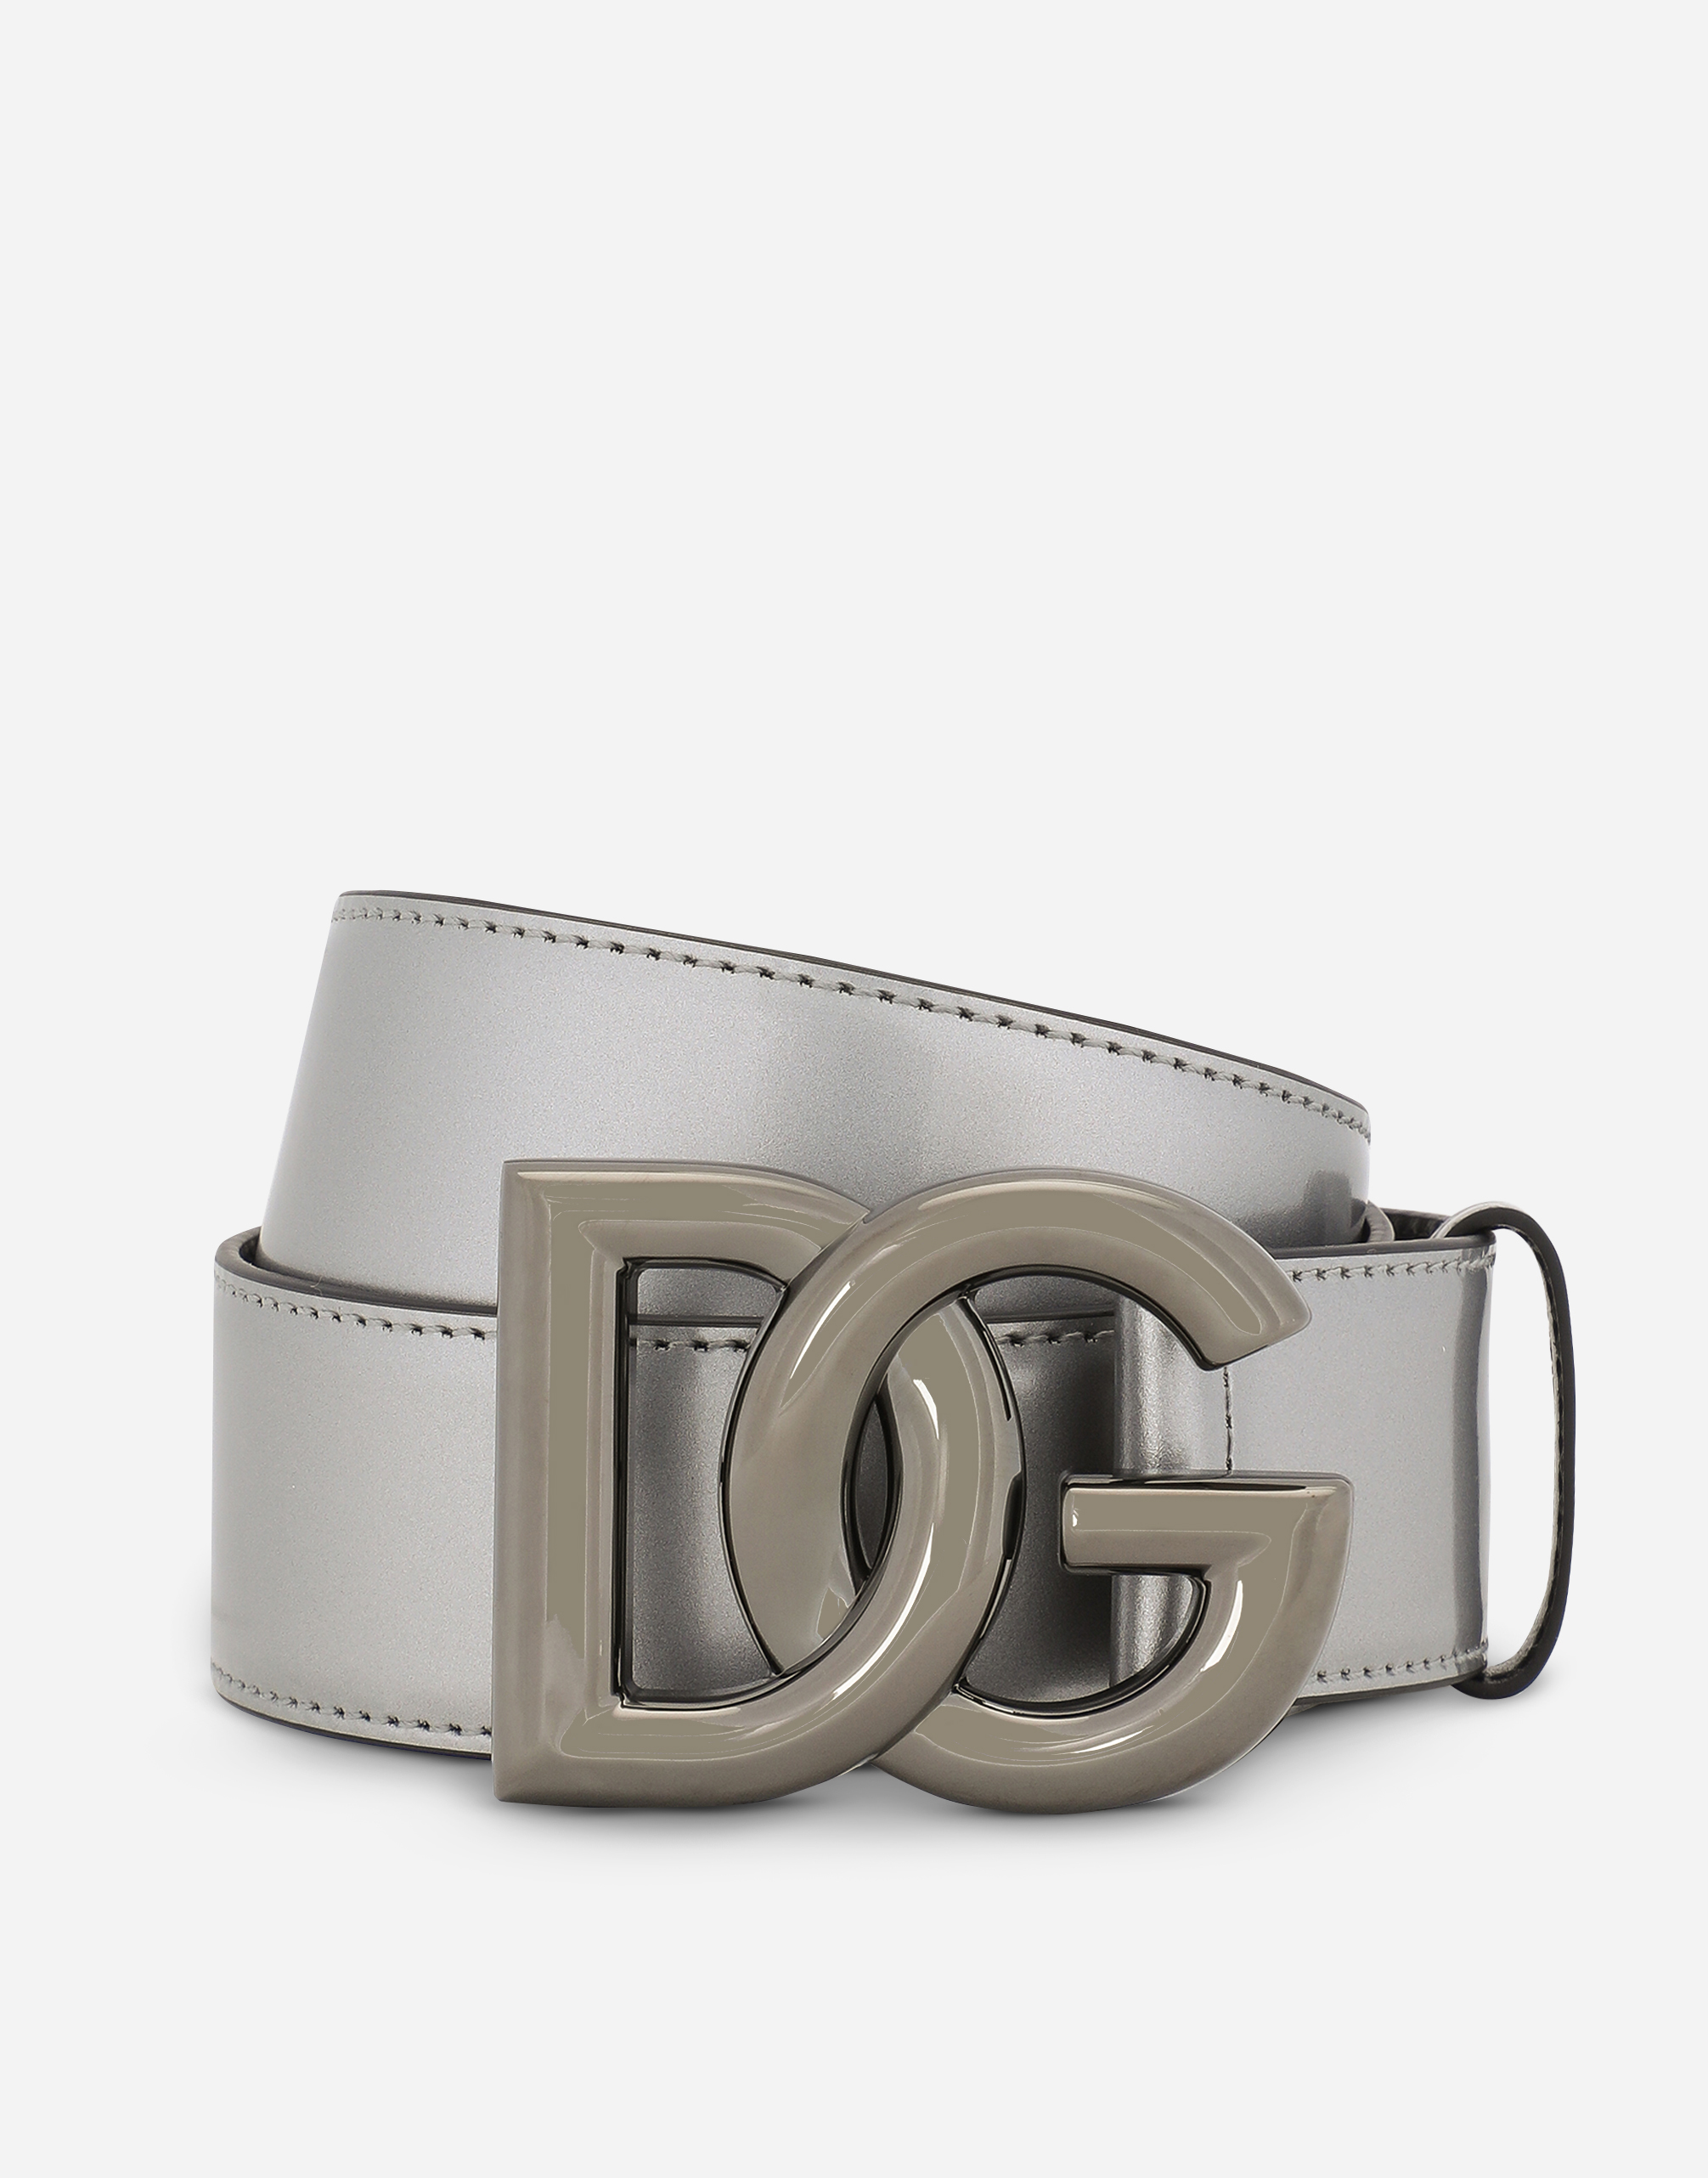 Calfskin belt with crossover DG buckle logo in Multicolor